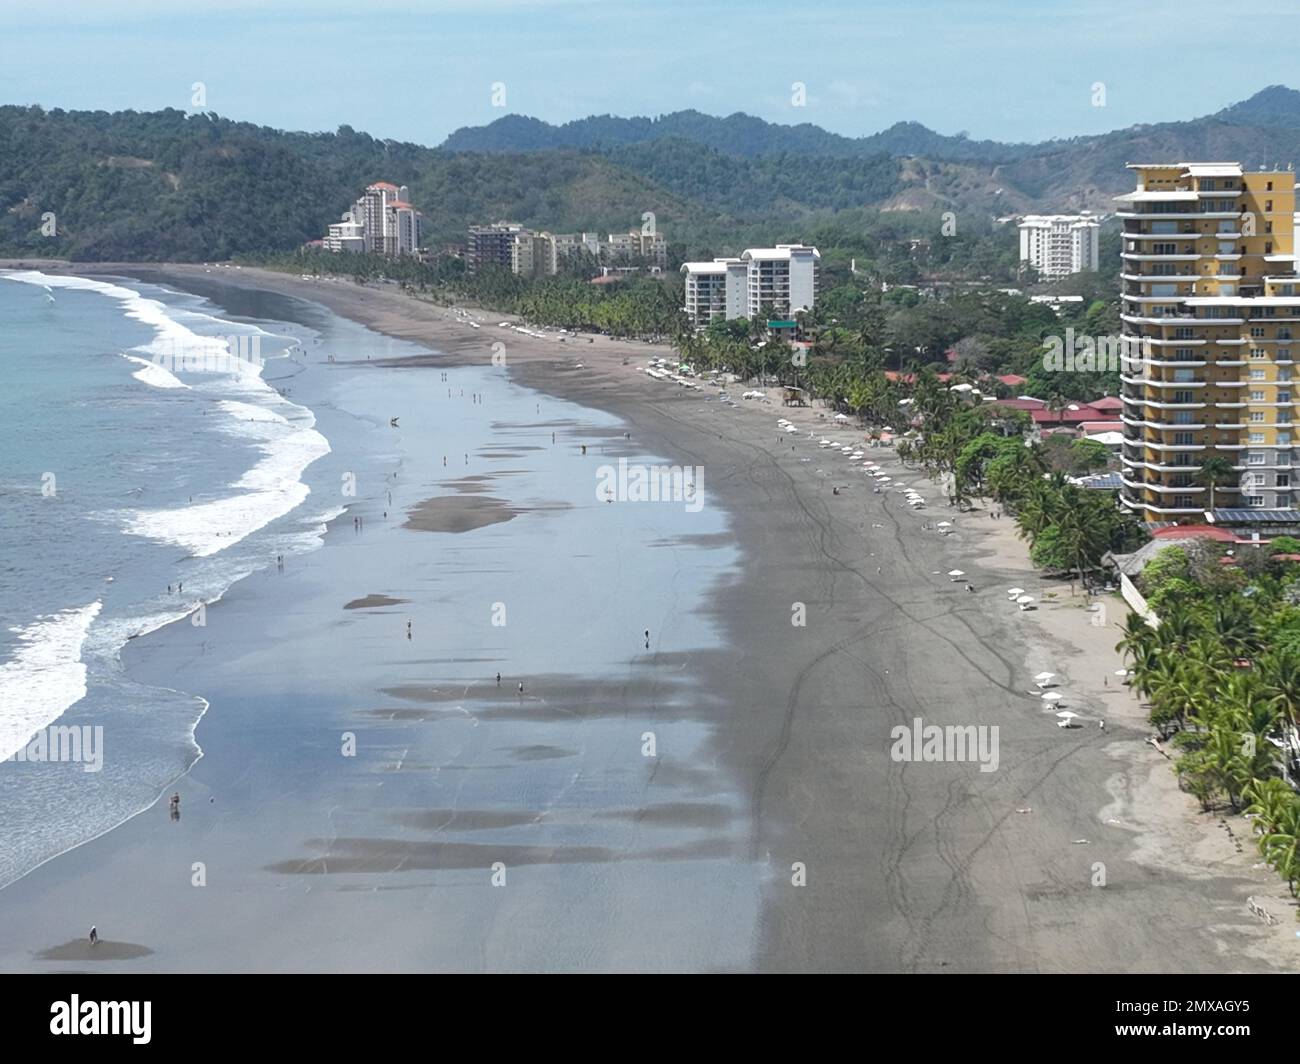 Visit Jaco Costa Rica  Beach full of Surf, Nightlife & Adventure